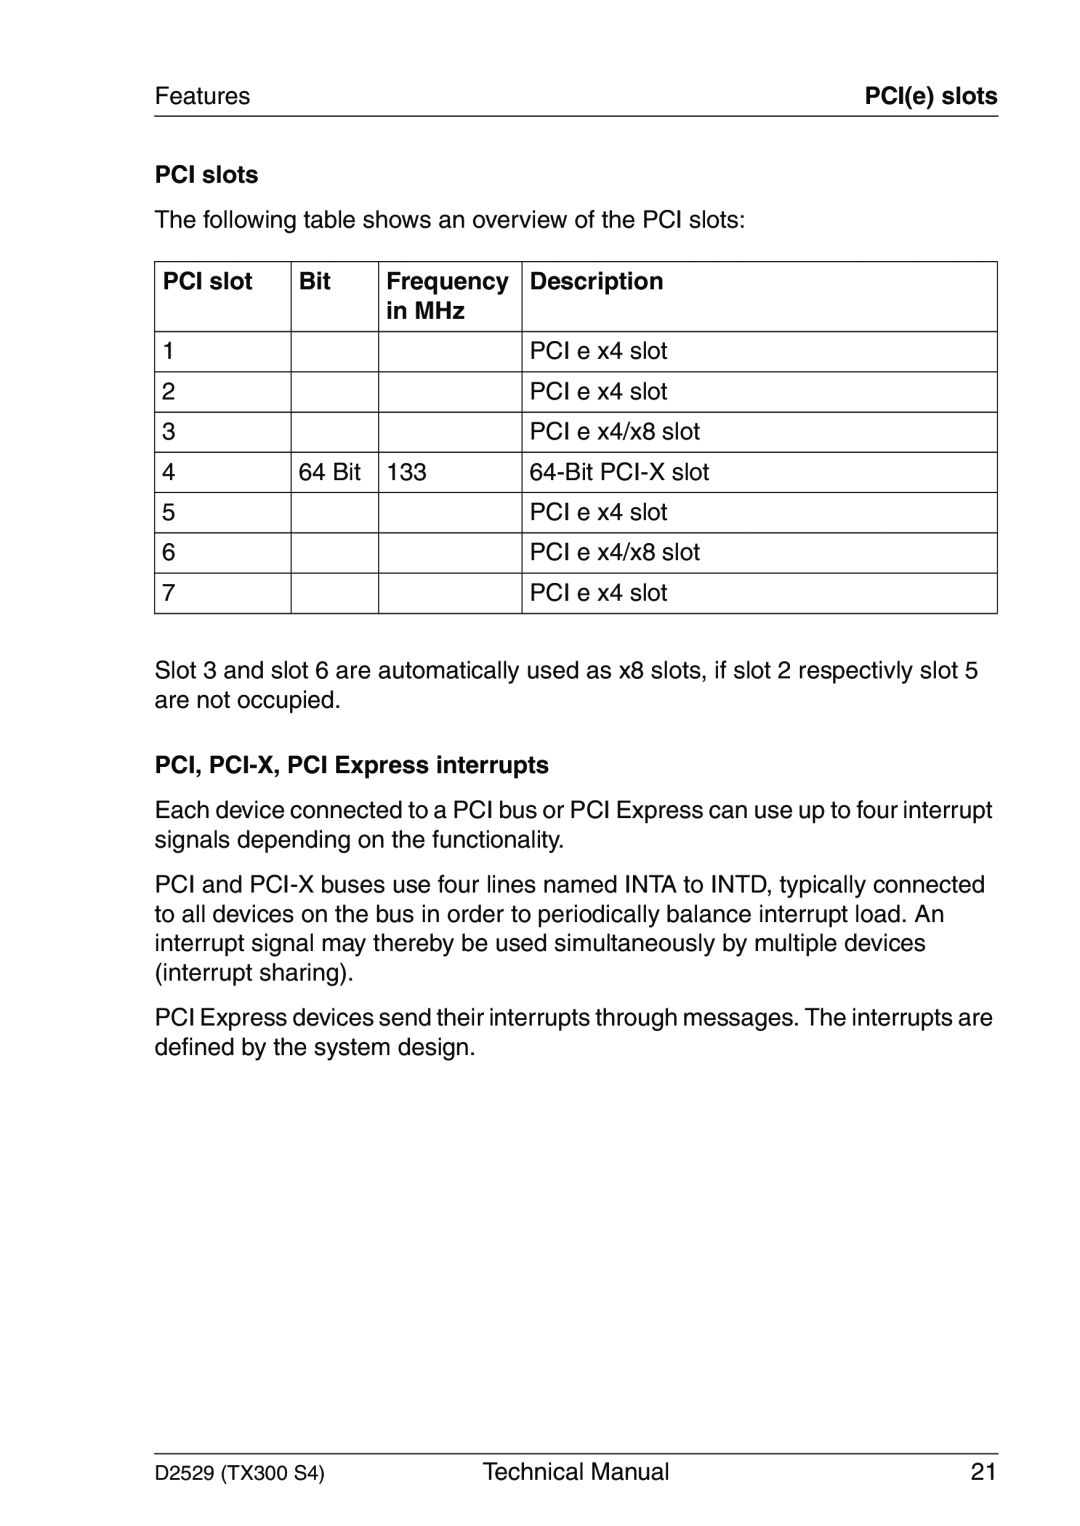 Fujitsu D2529 Frequency, Description, in MHz, PCI, PCI-X, PCI Express interrupts, PCIe slots, PCI slots 